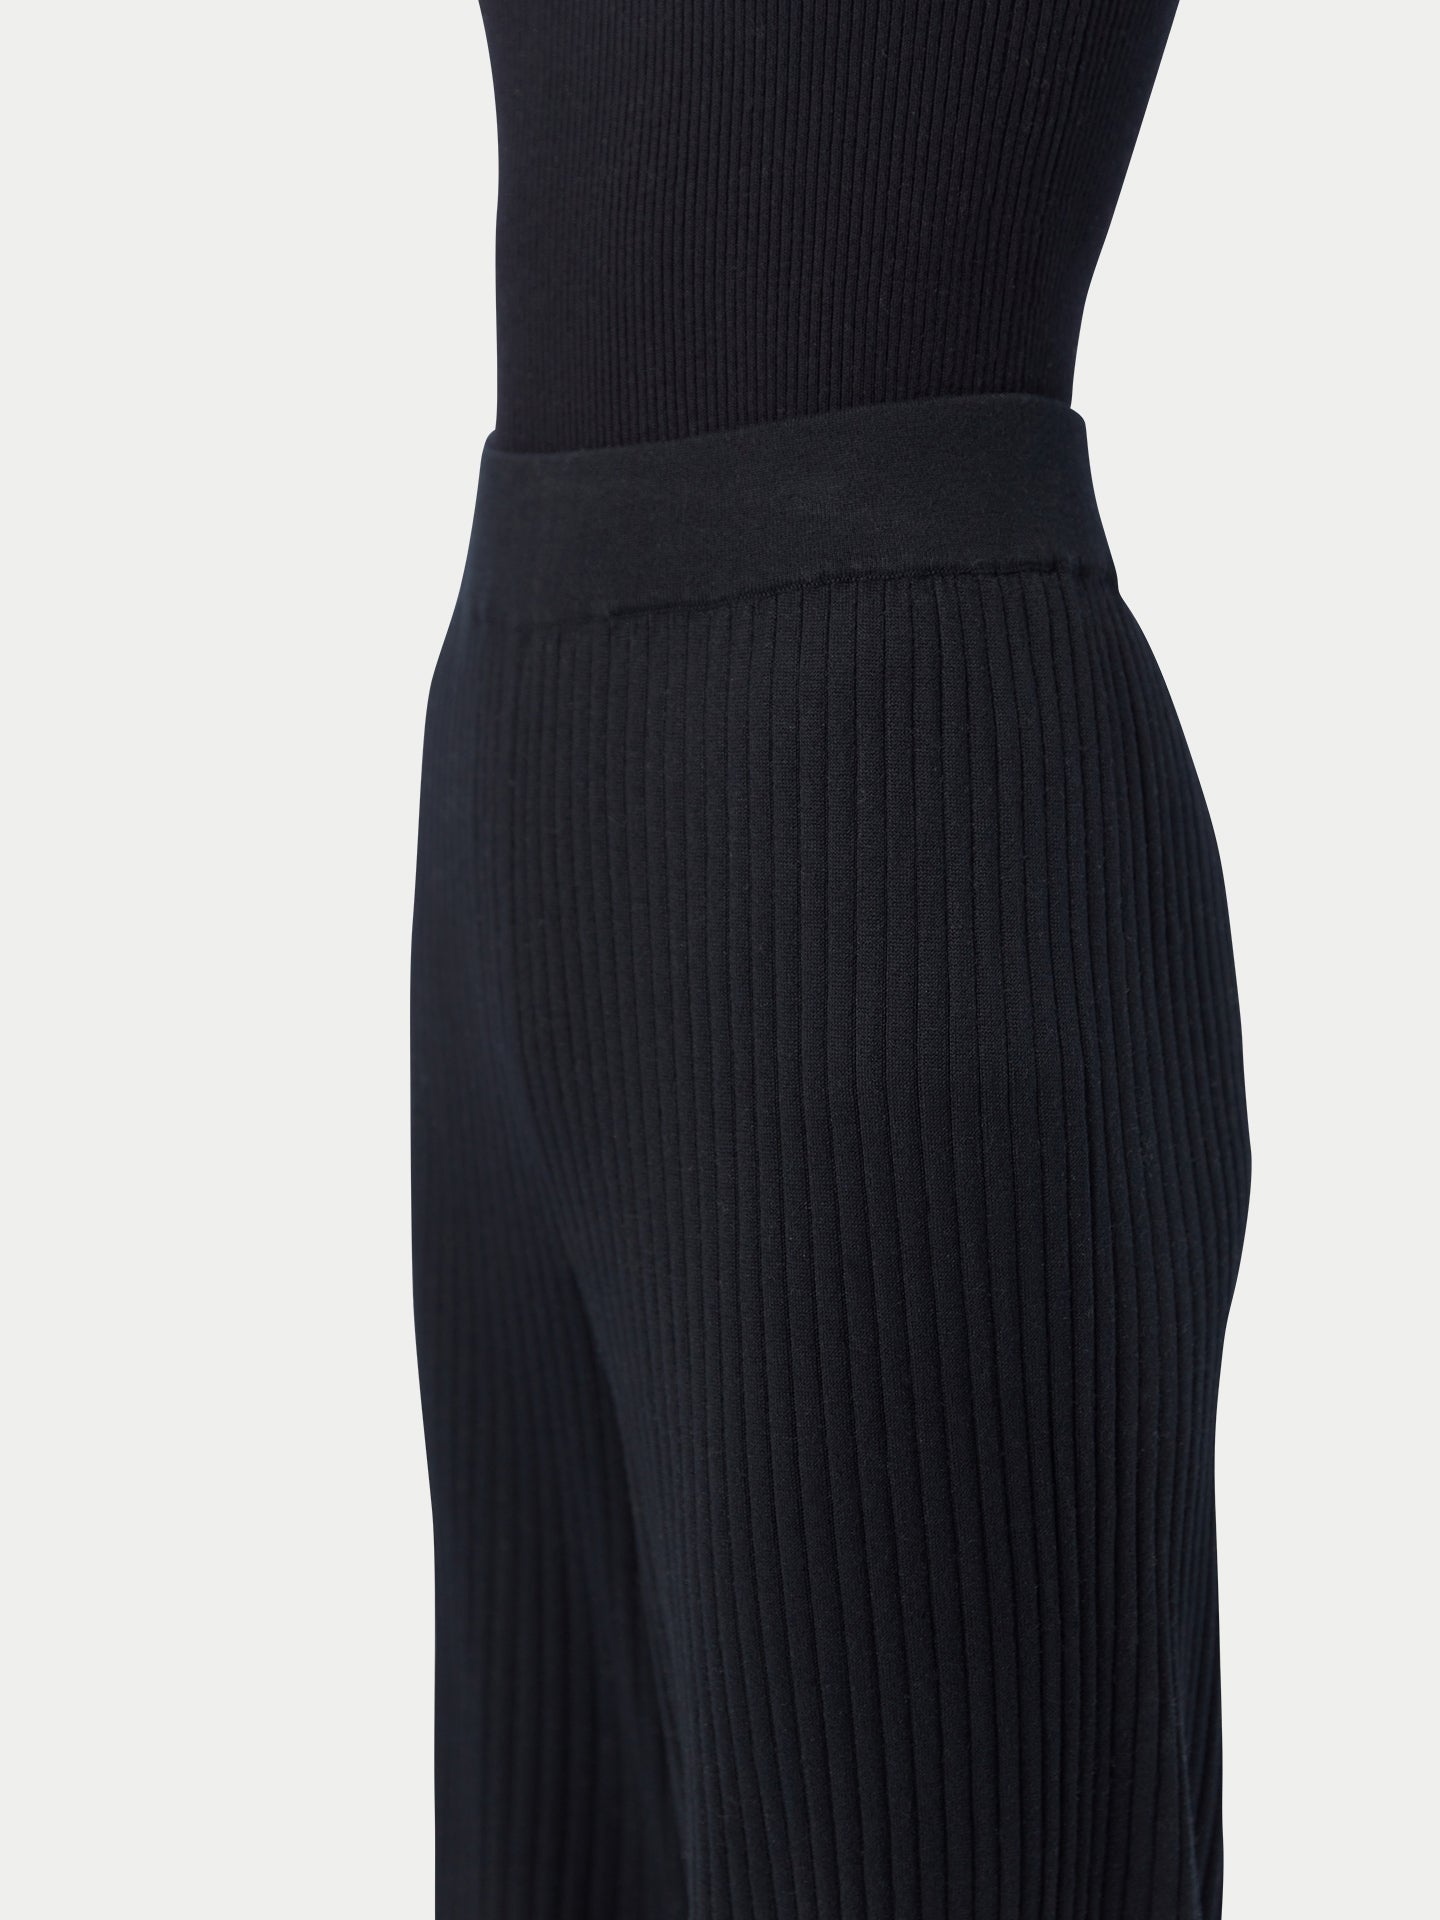 Women's Rib-Knit Silk Cashmere Blend Pants Black - Gobi Cashmere